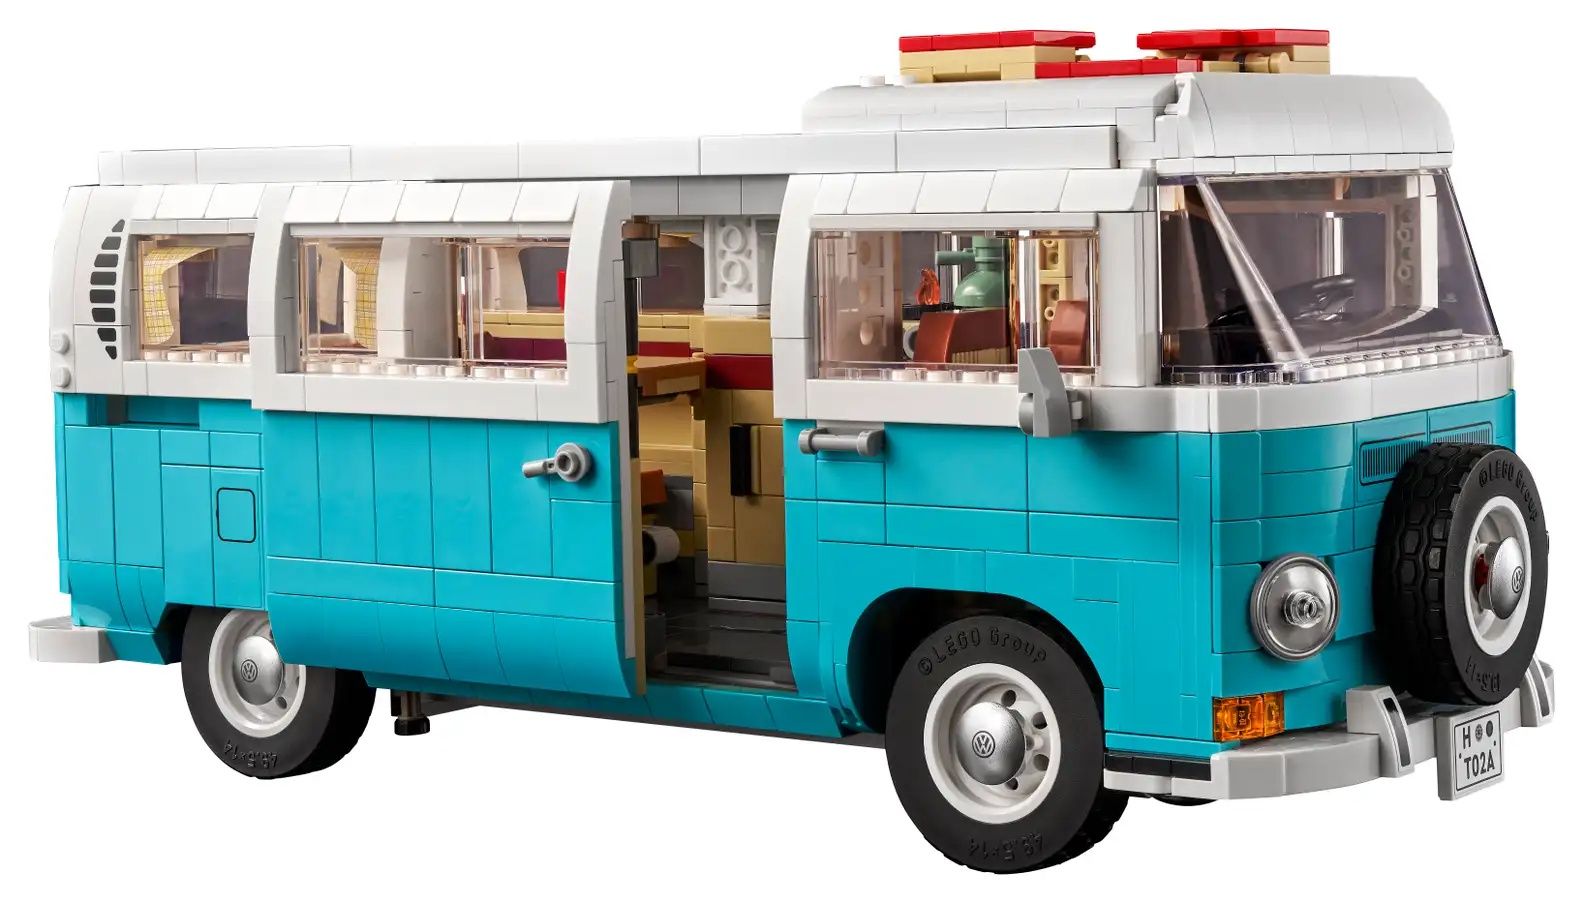 Lego Фургон Volkswagen T2 (новый, оригинал)